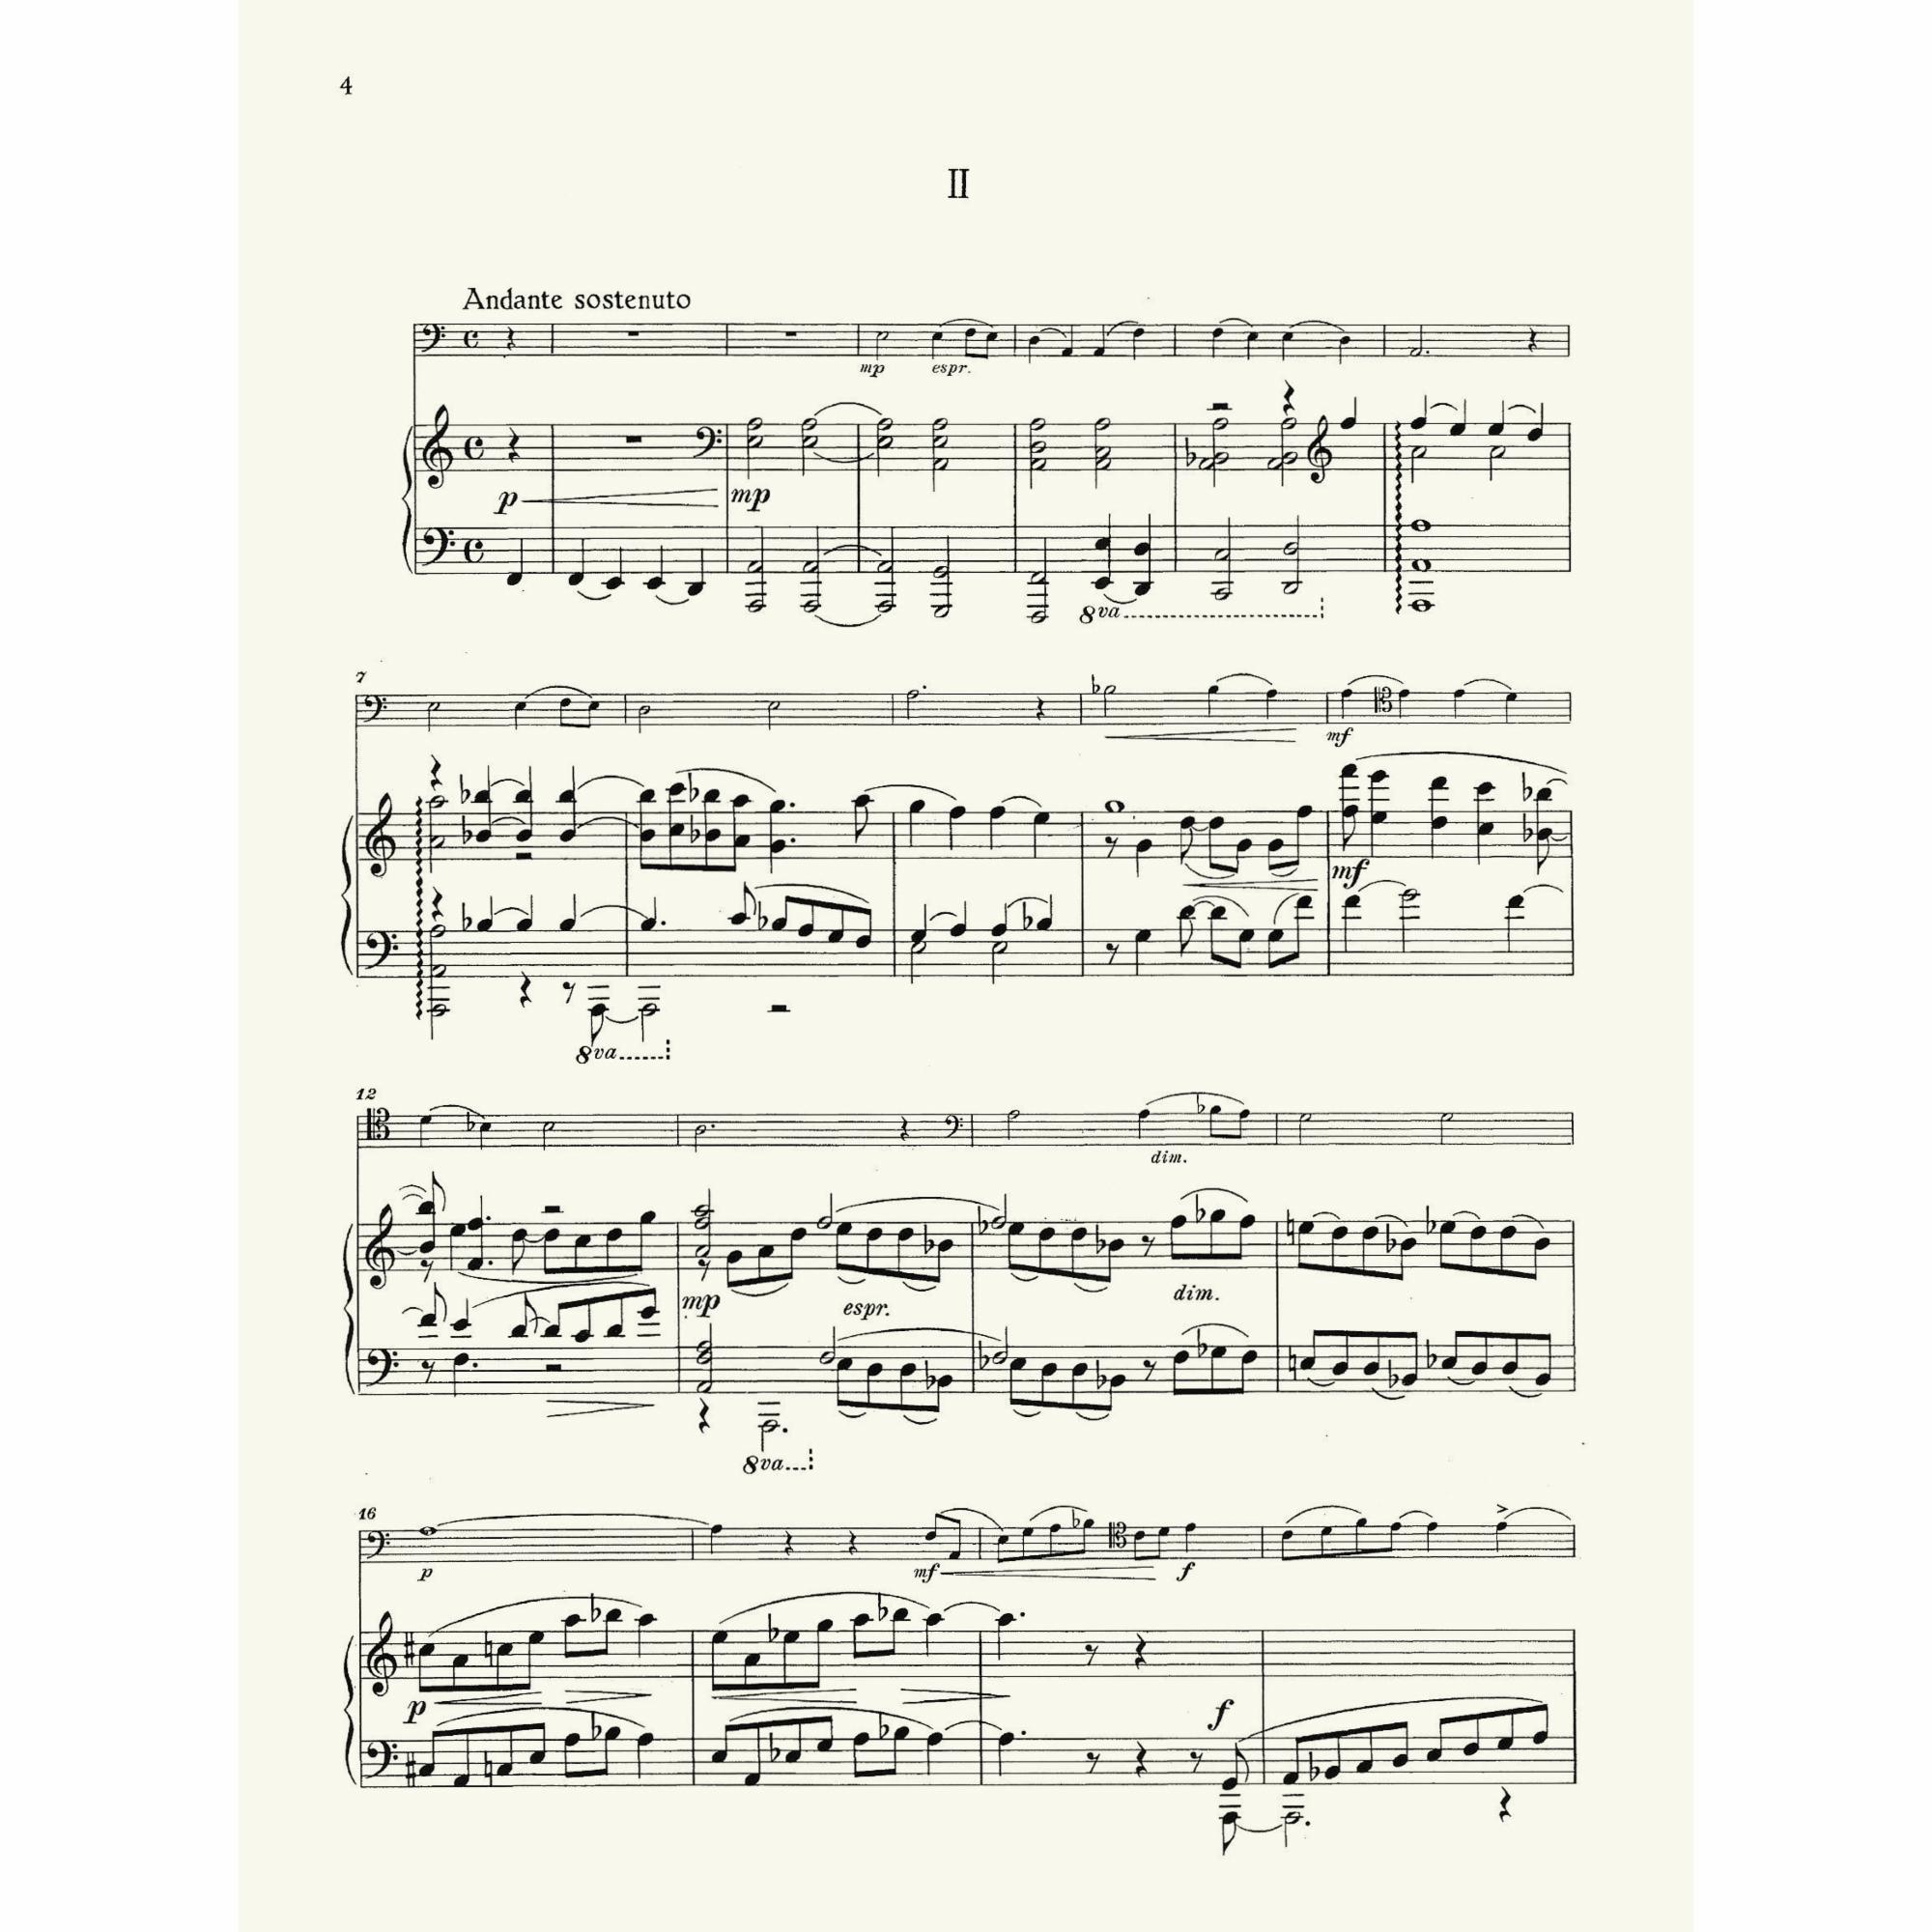 Sample: Piano (Pg. 4)